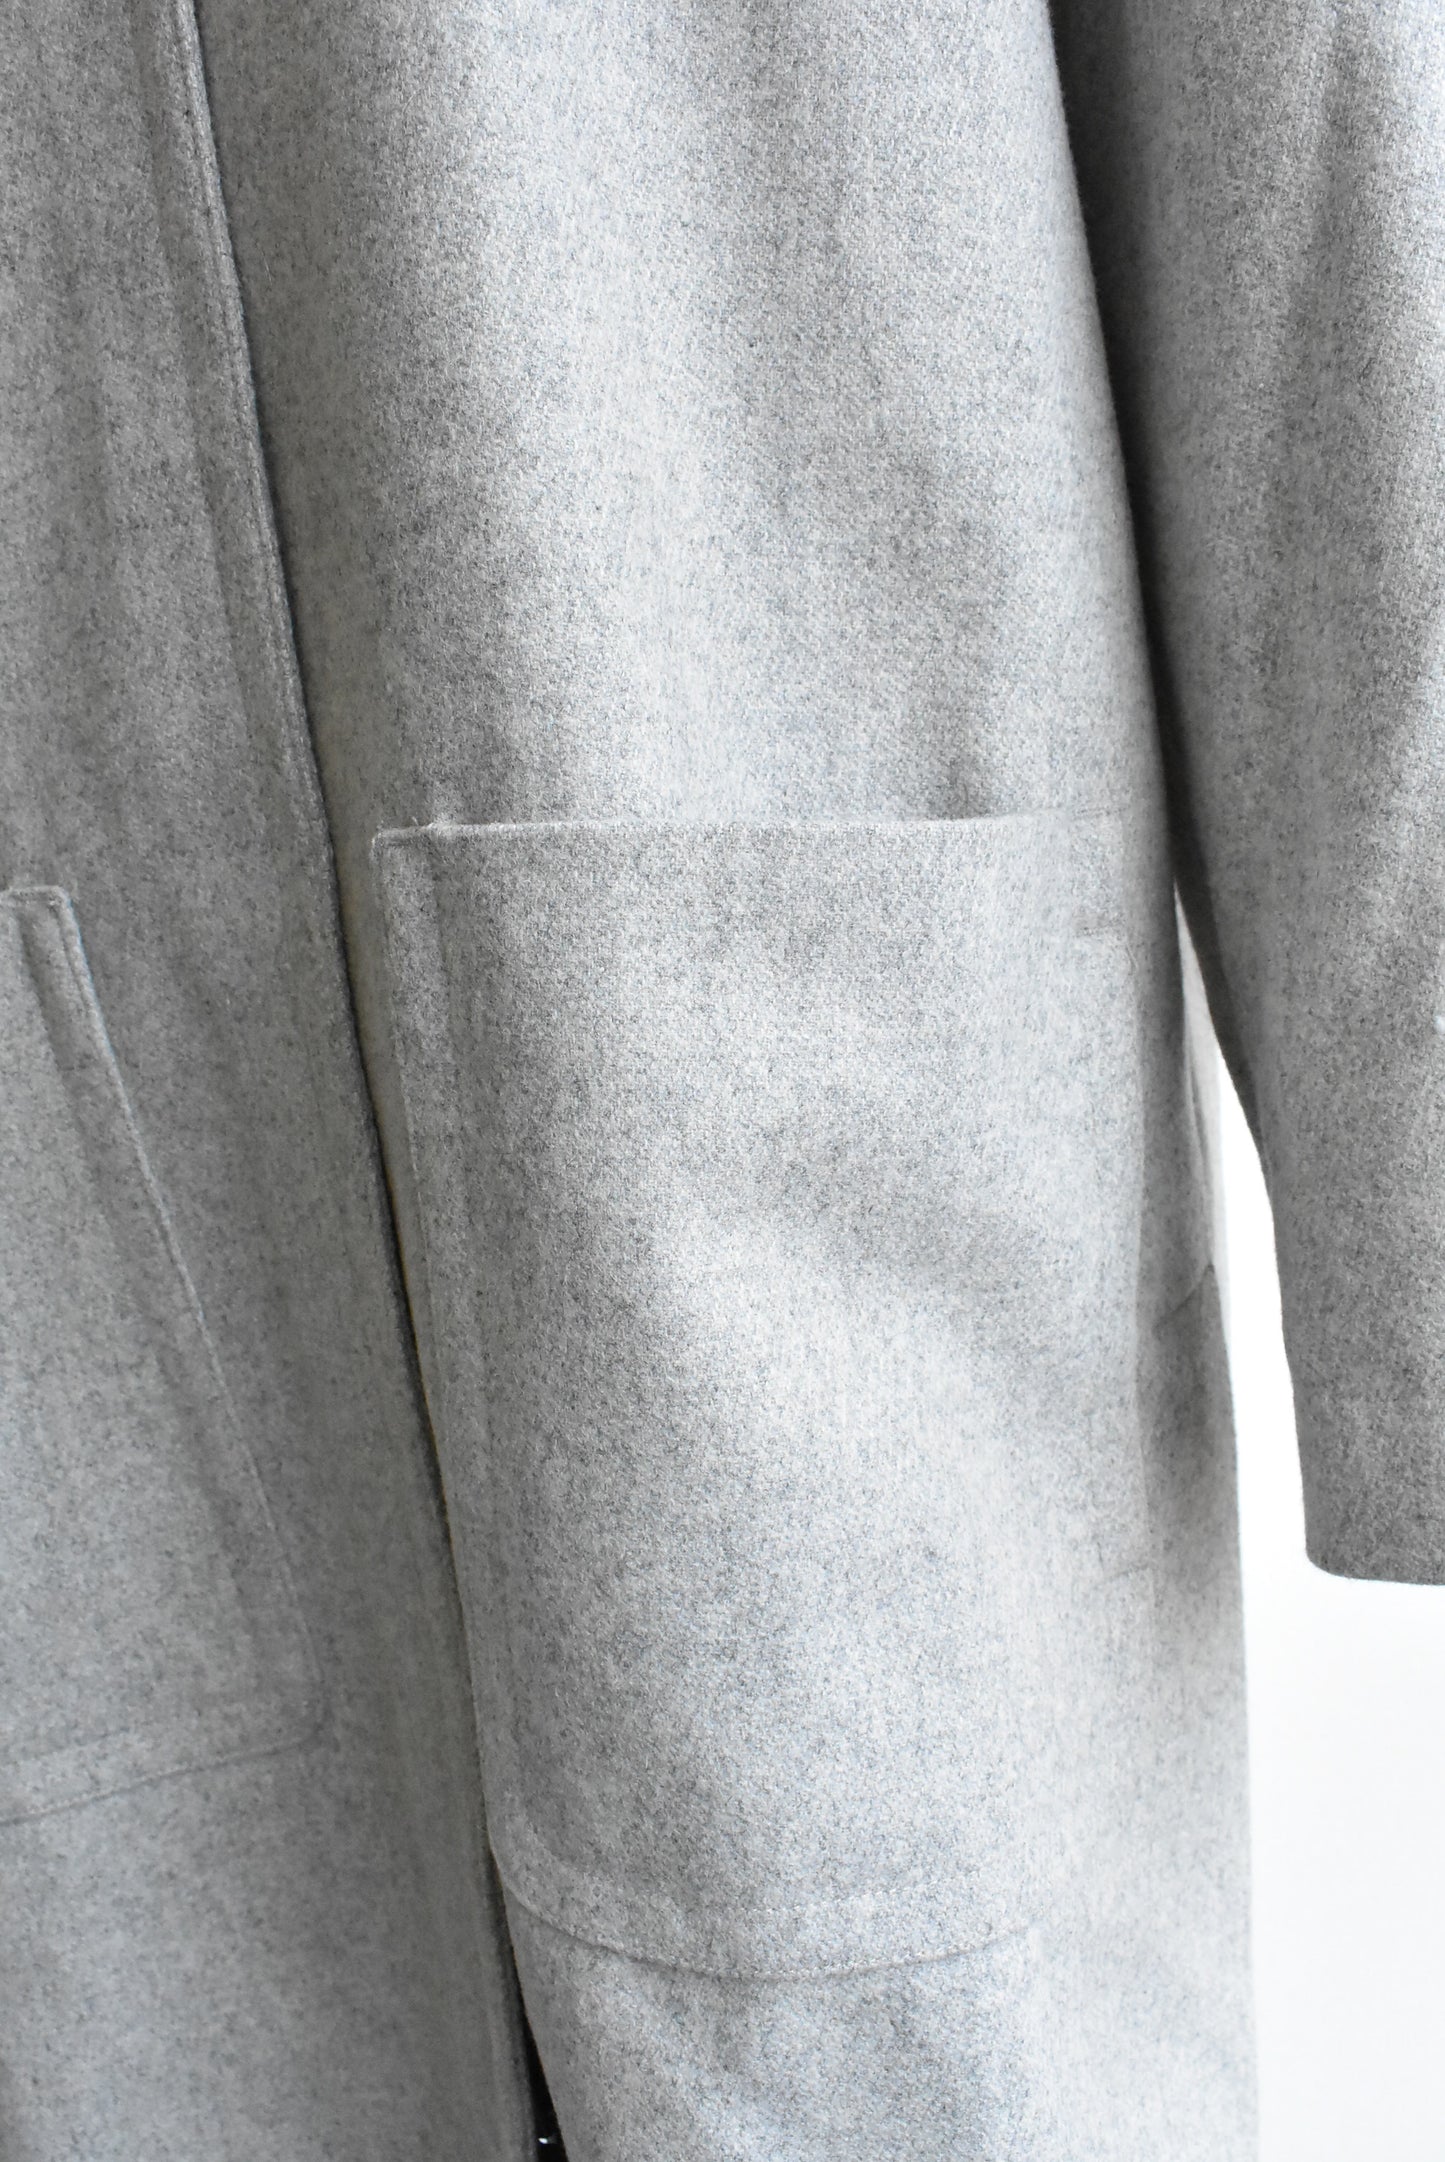 Trenery grey wool blend coat, XS